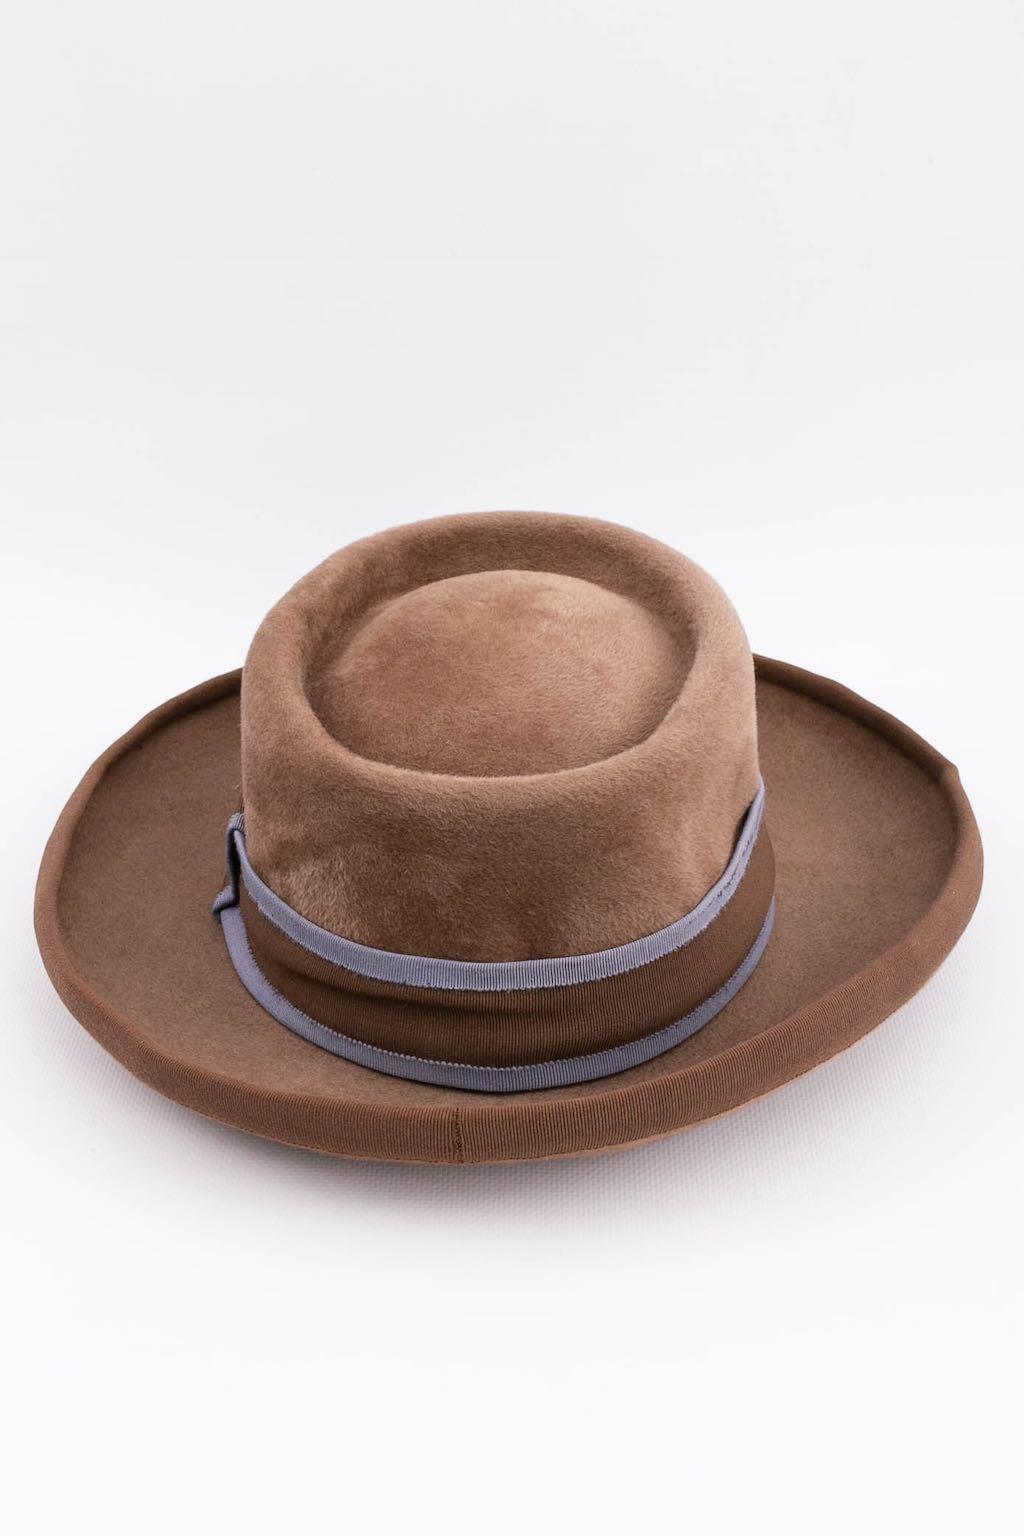 Motsch Brown Shiny Felt Hat In Good Condition For Sale In SAINT-OUEN-SUR-SEINE, FR